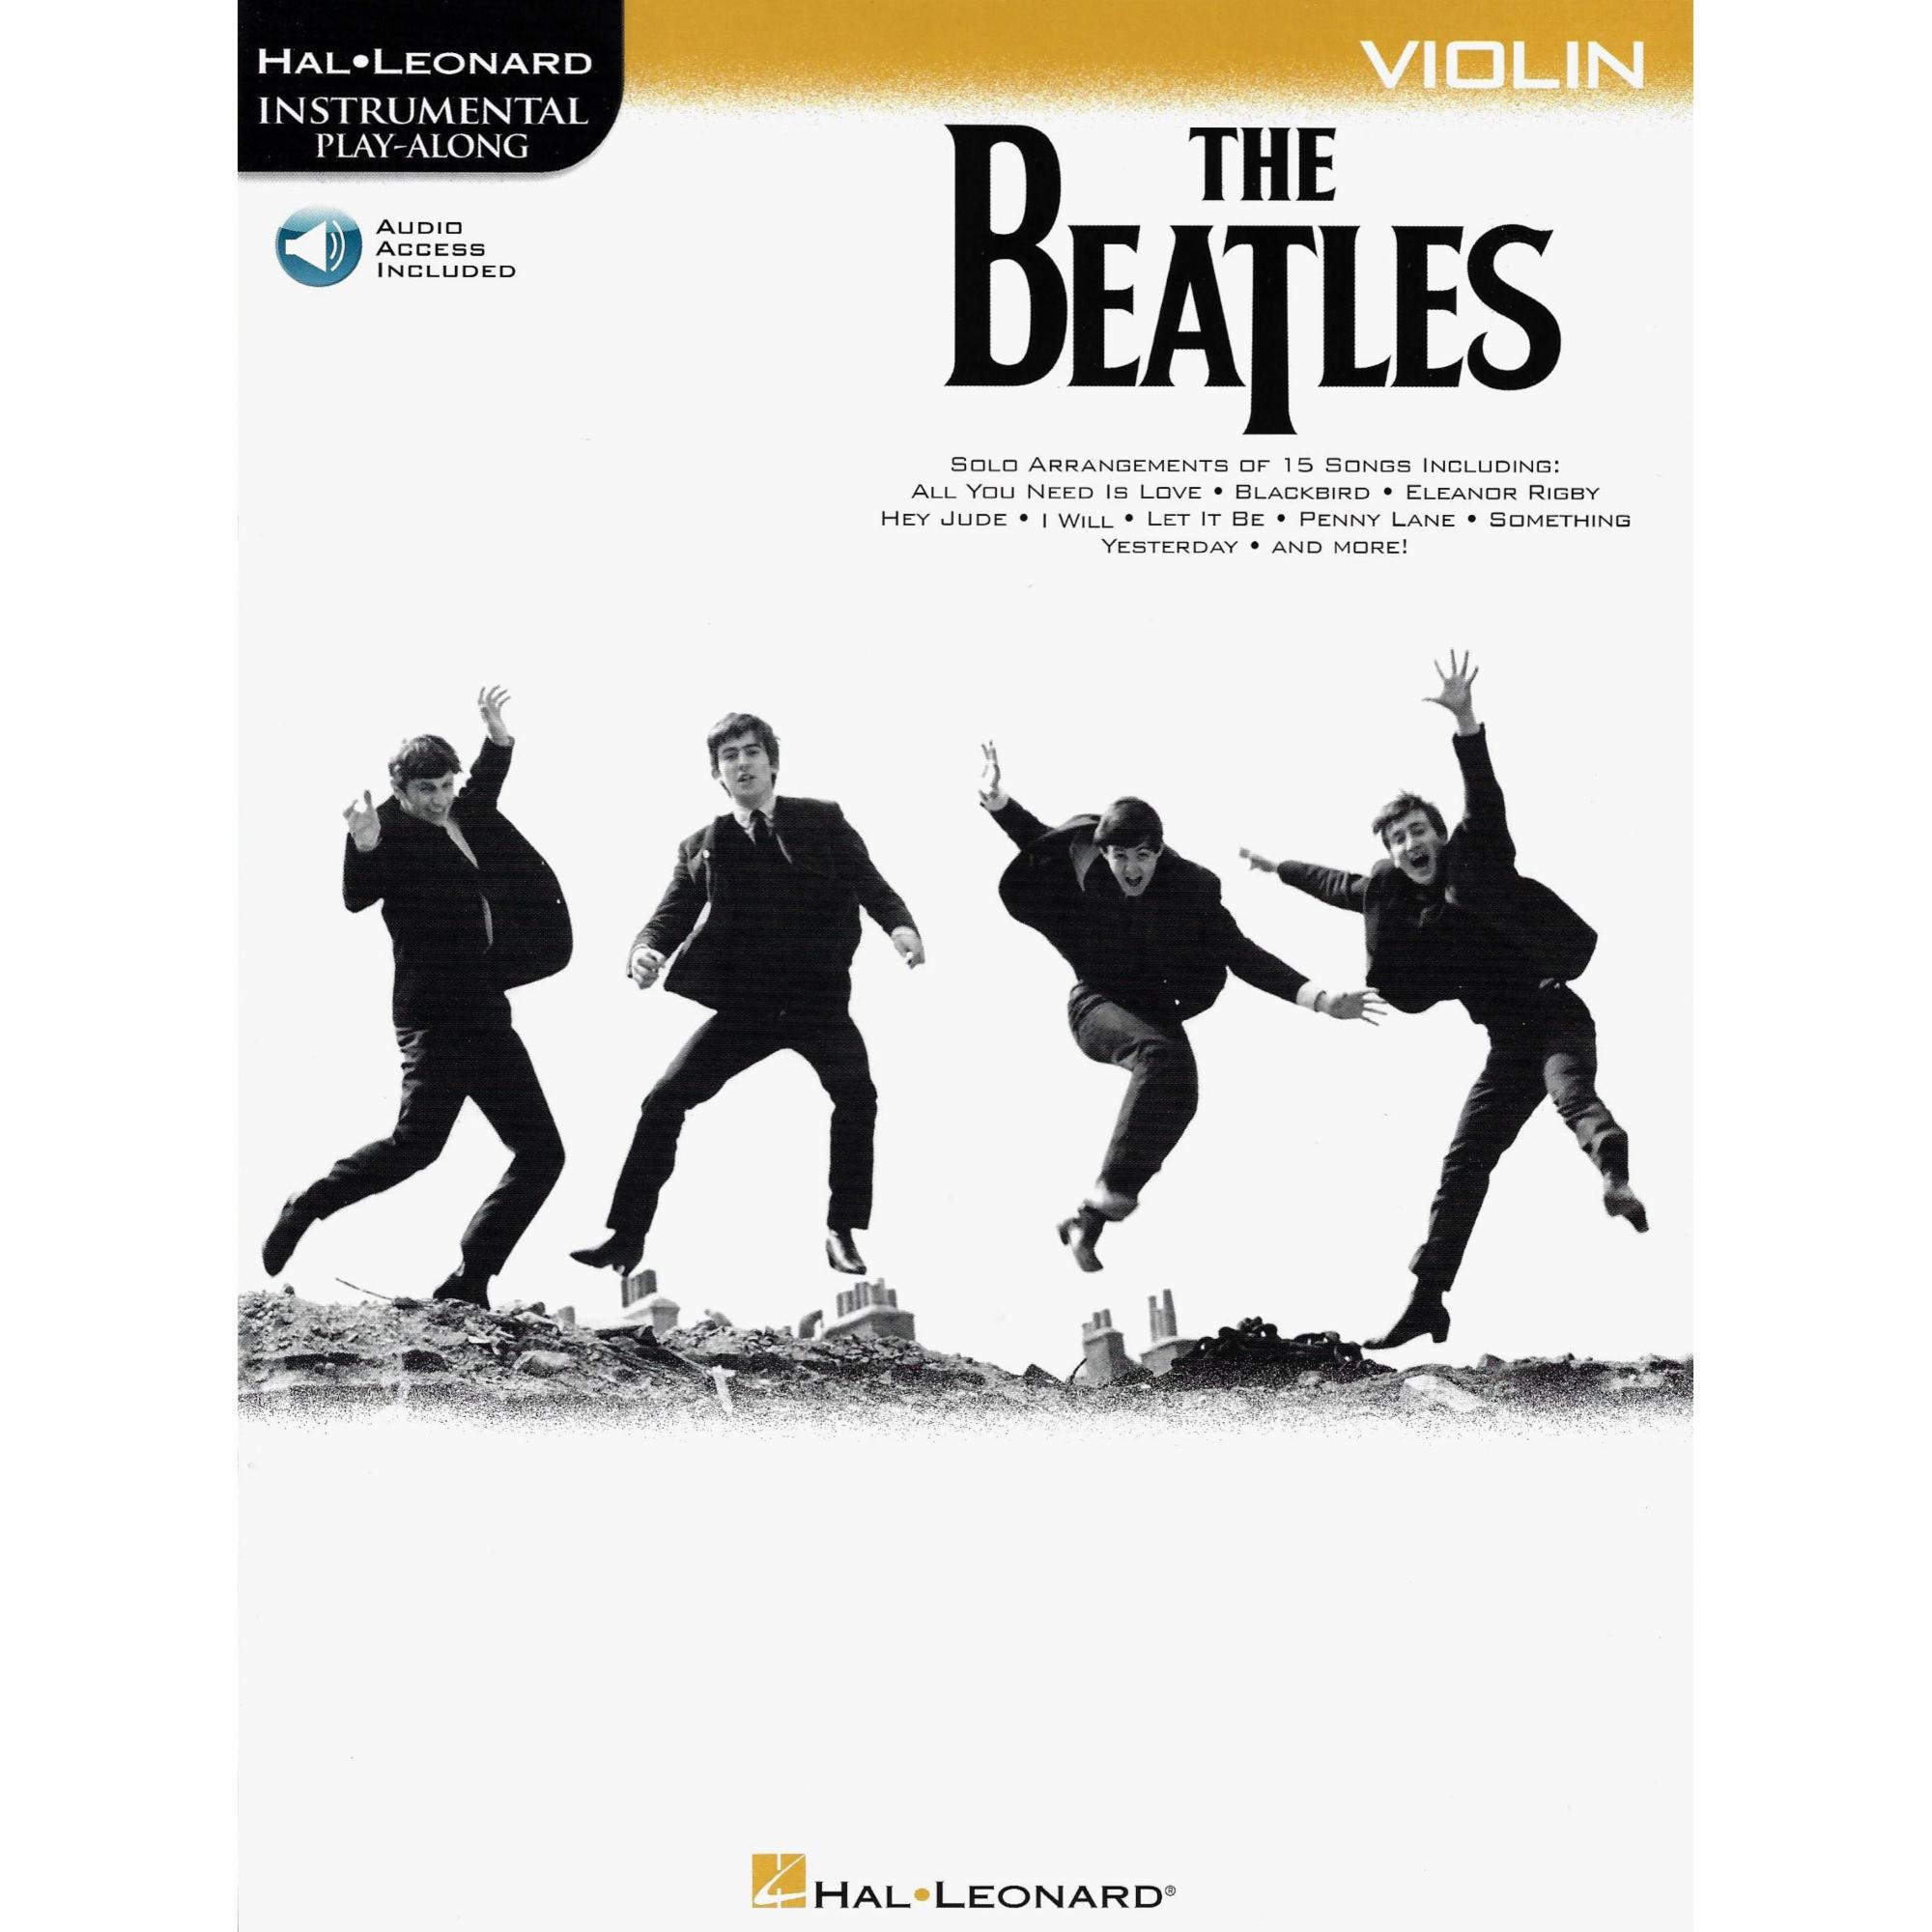 The Beatles for Violin, Viola, or Cello